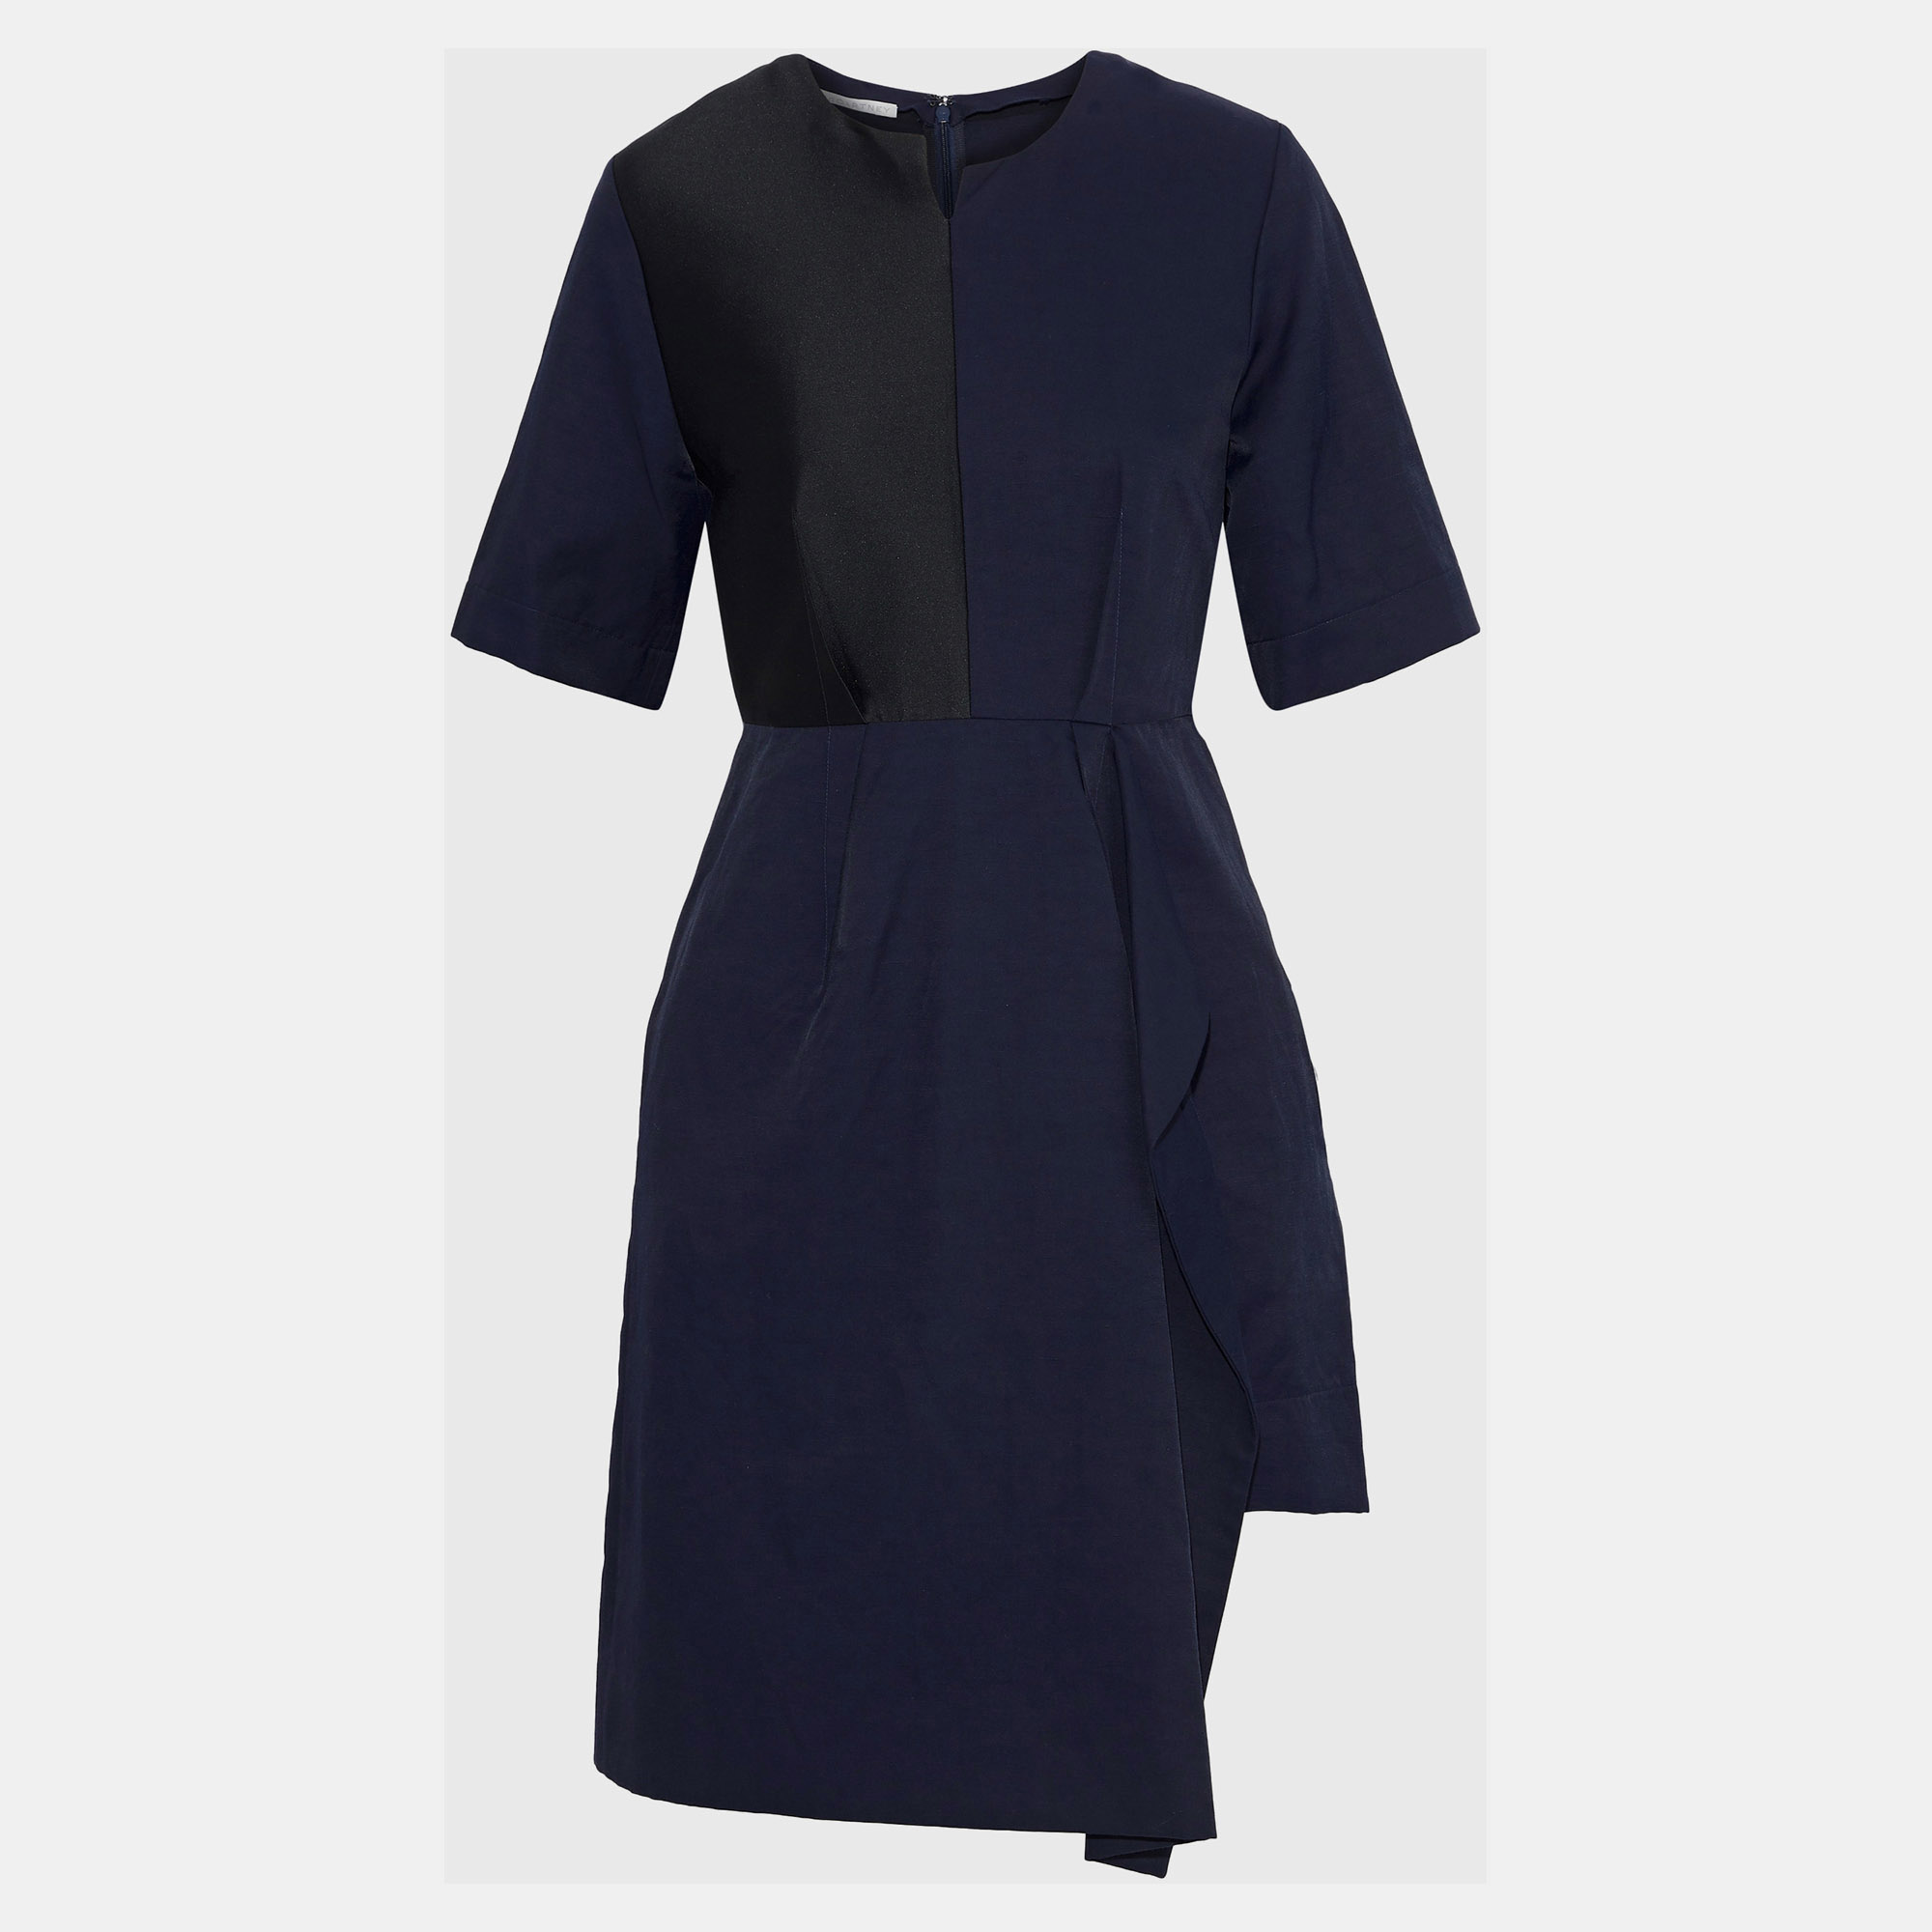 Stella mccartney navy blue cotton blend knee-length dress it 44